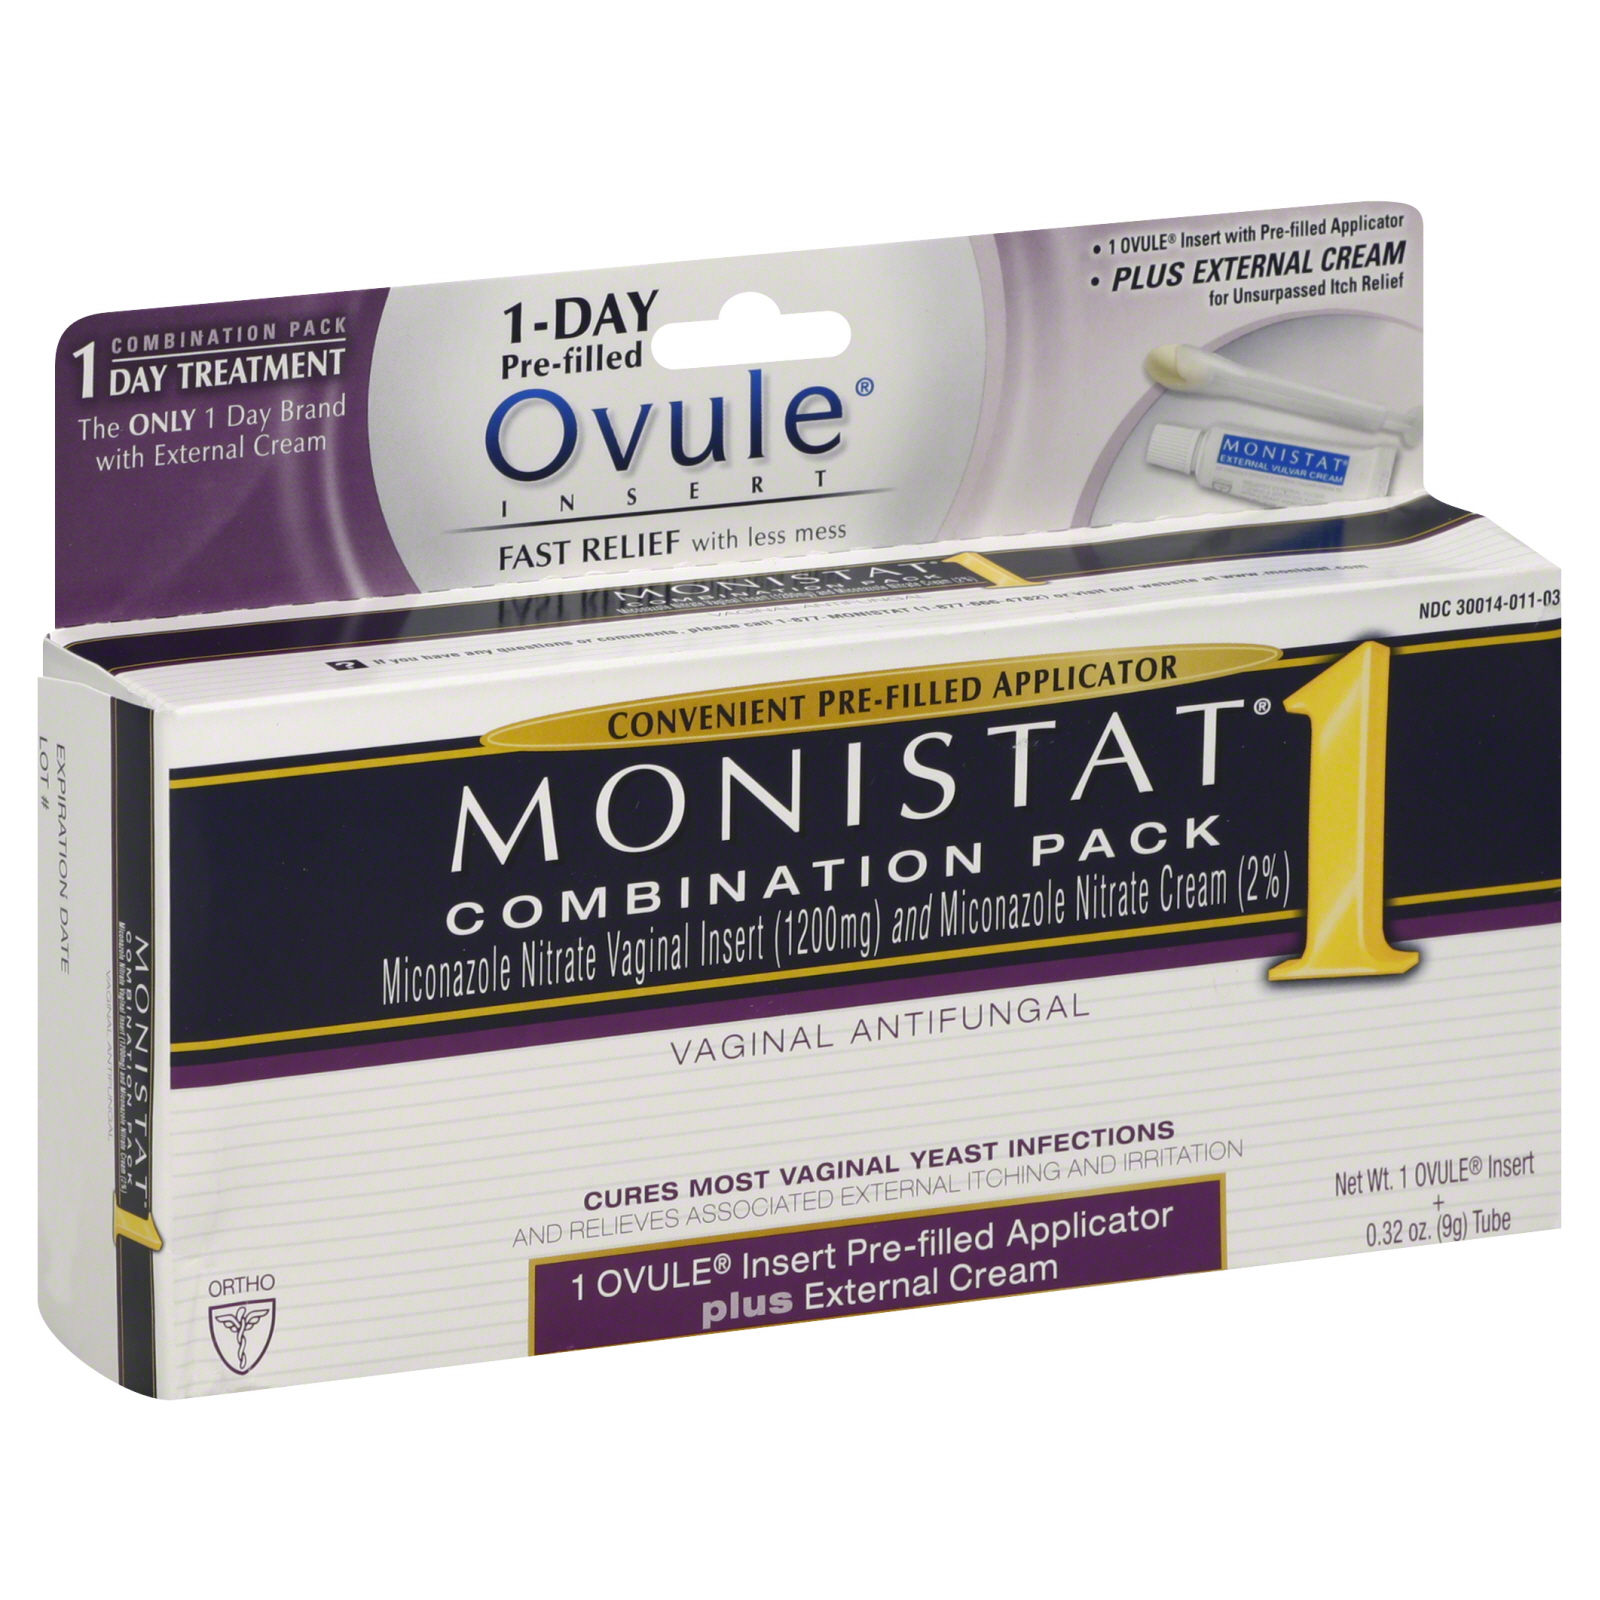 Monistat 1 Vaginal Antifungal, Combination Pack, 1 pack